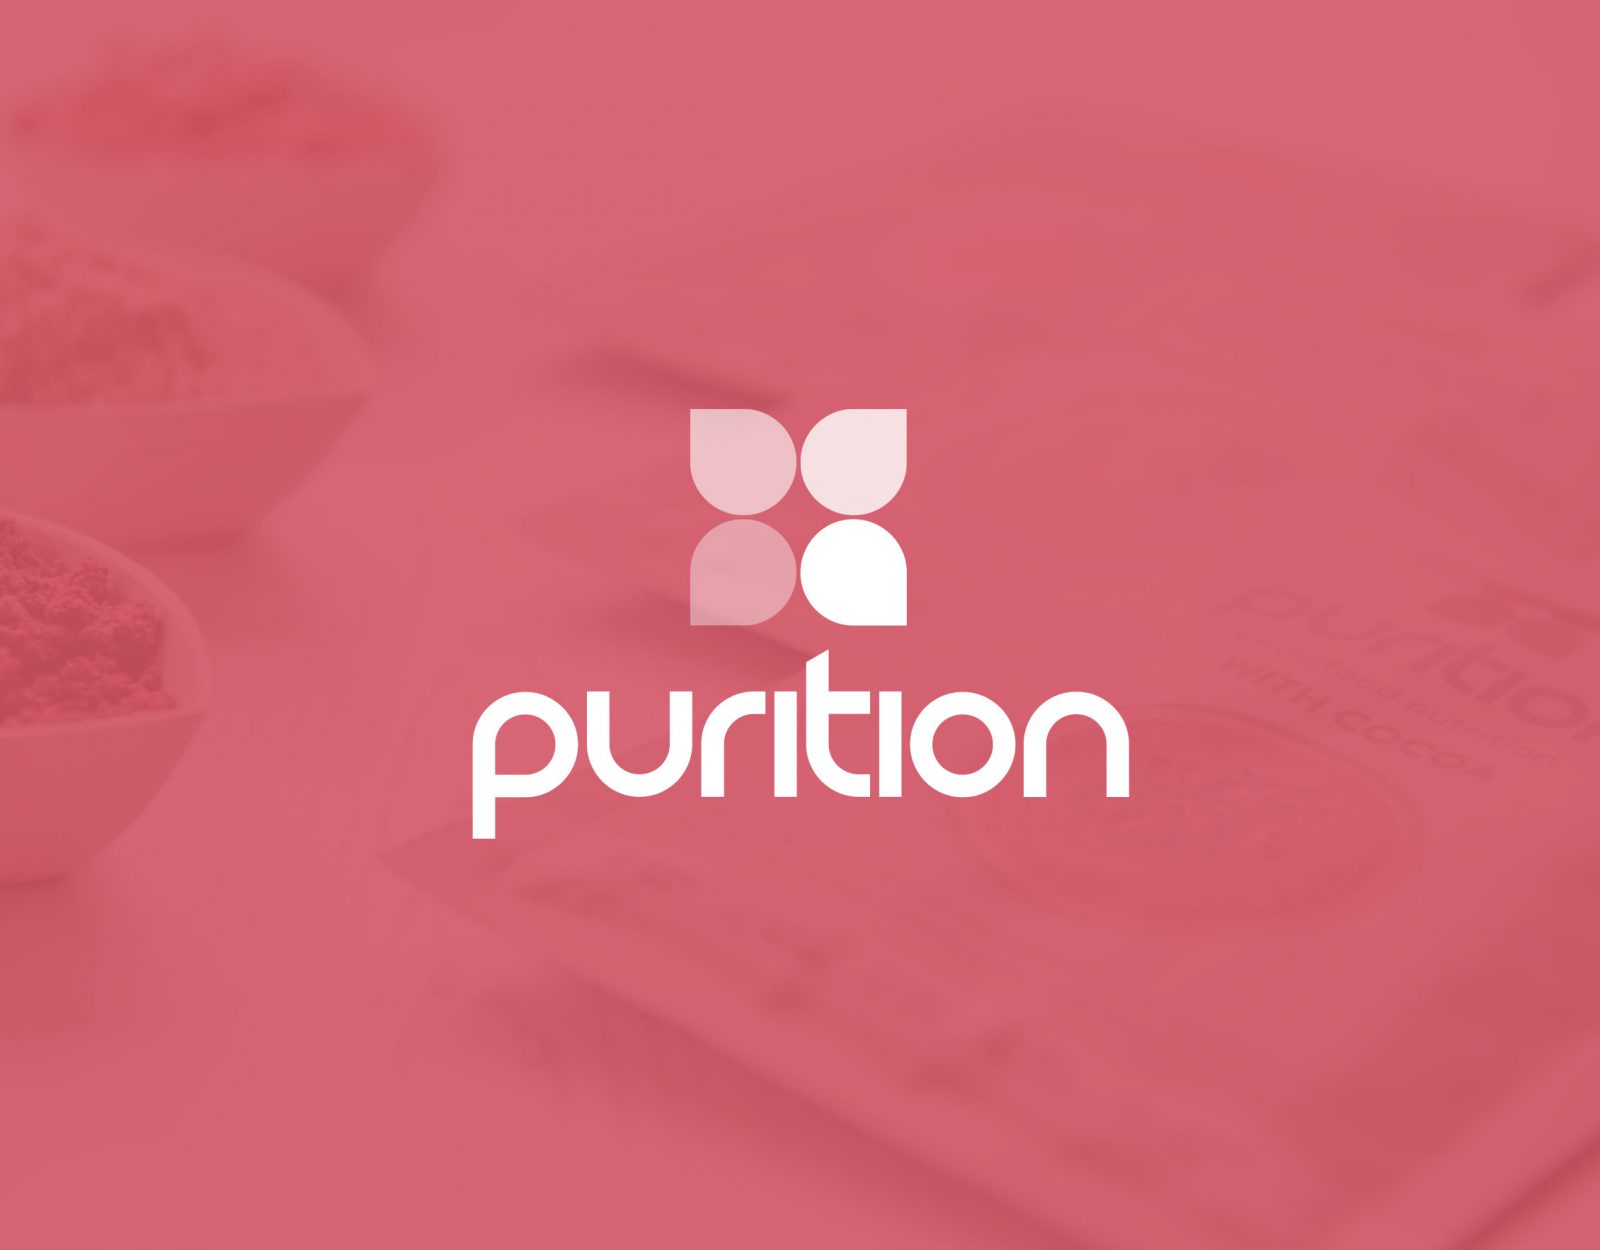 Purition logo